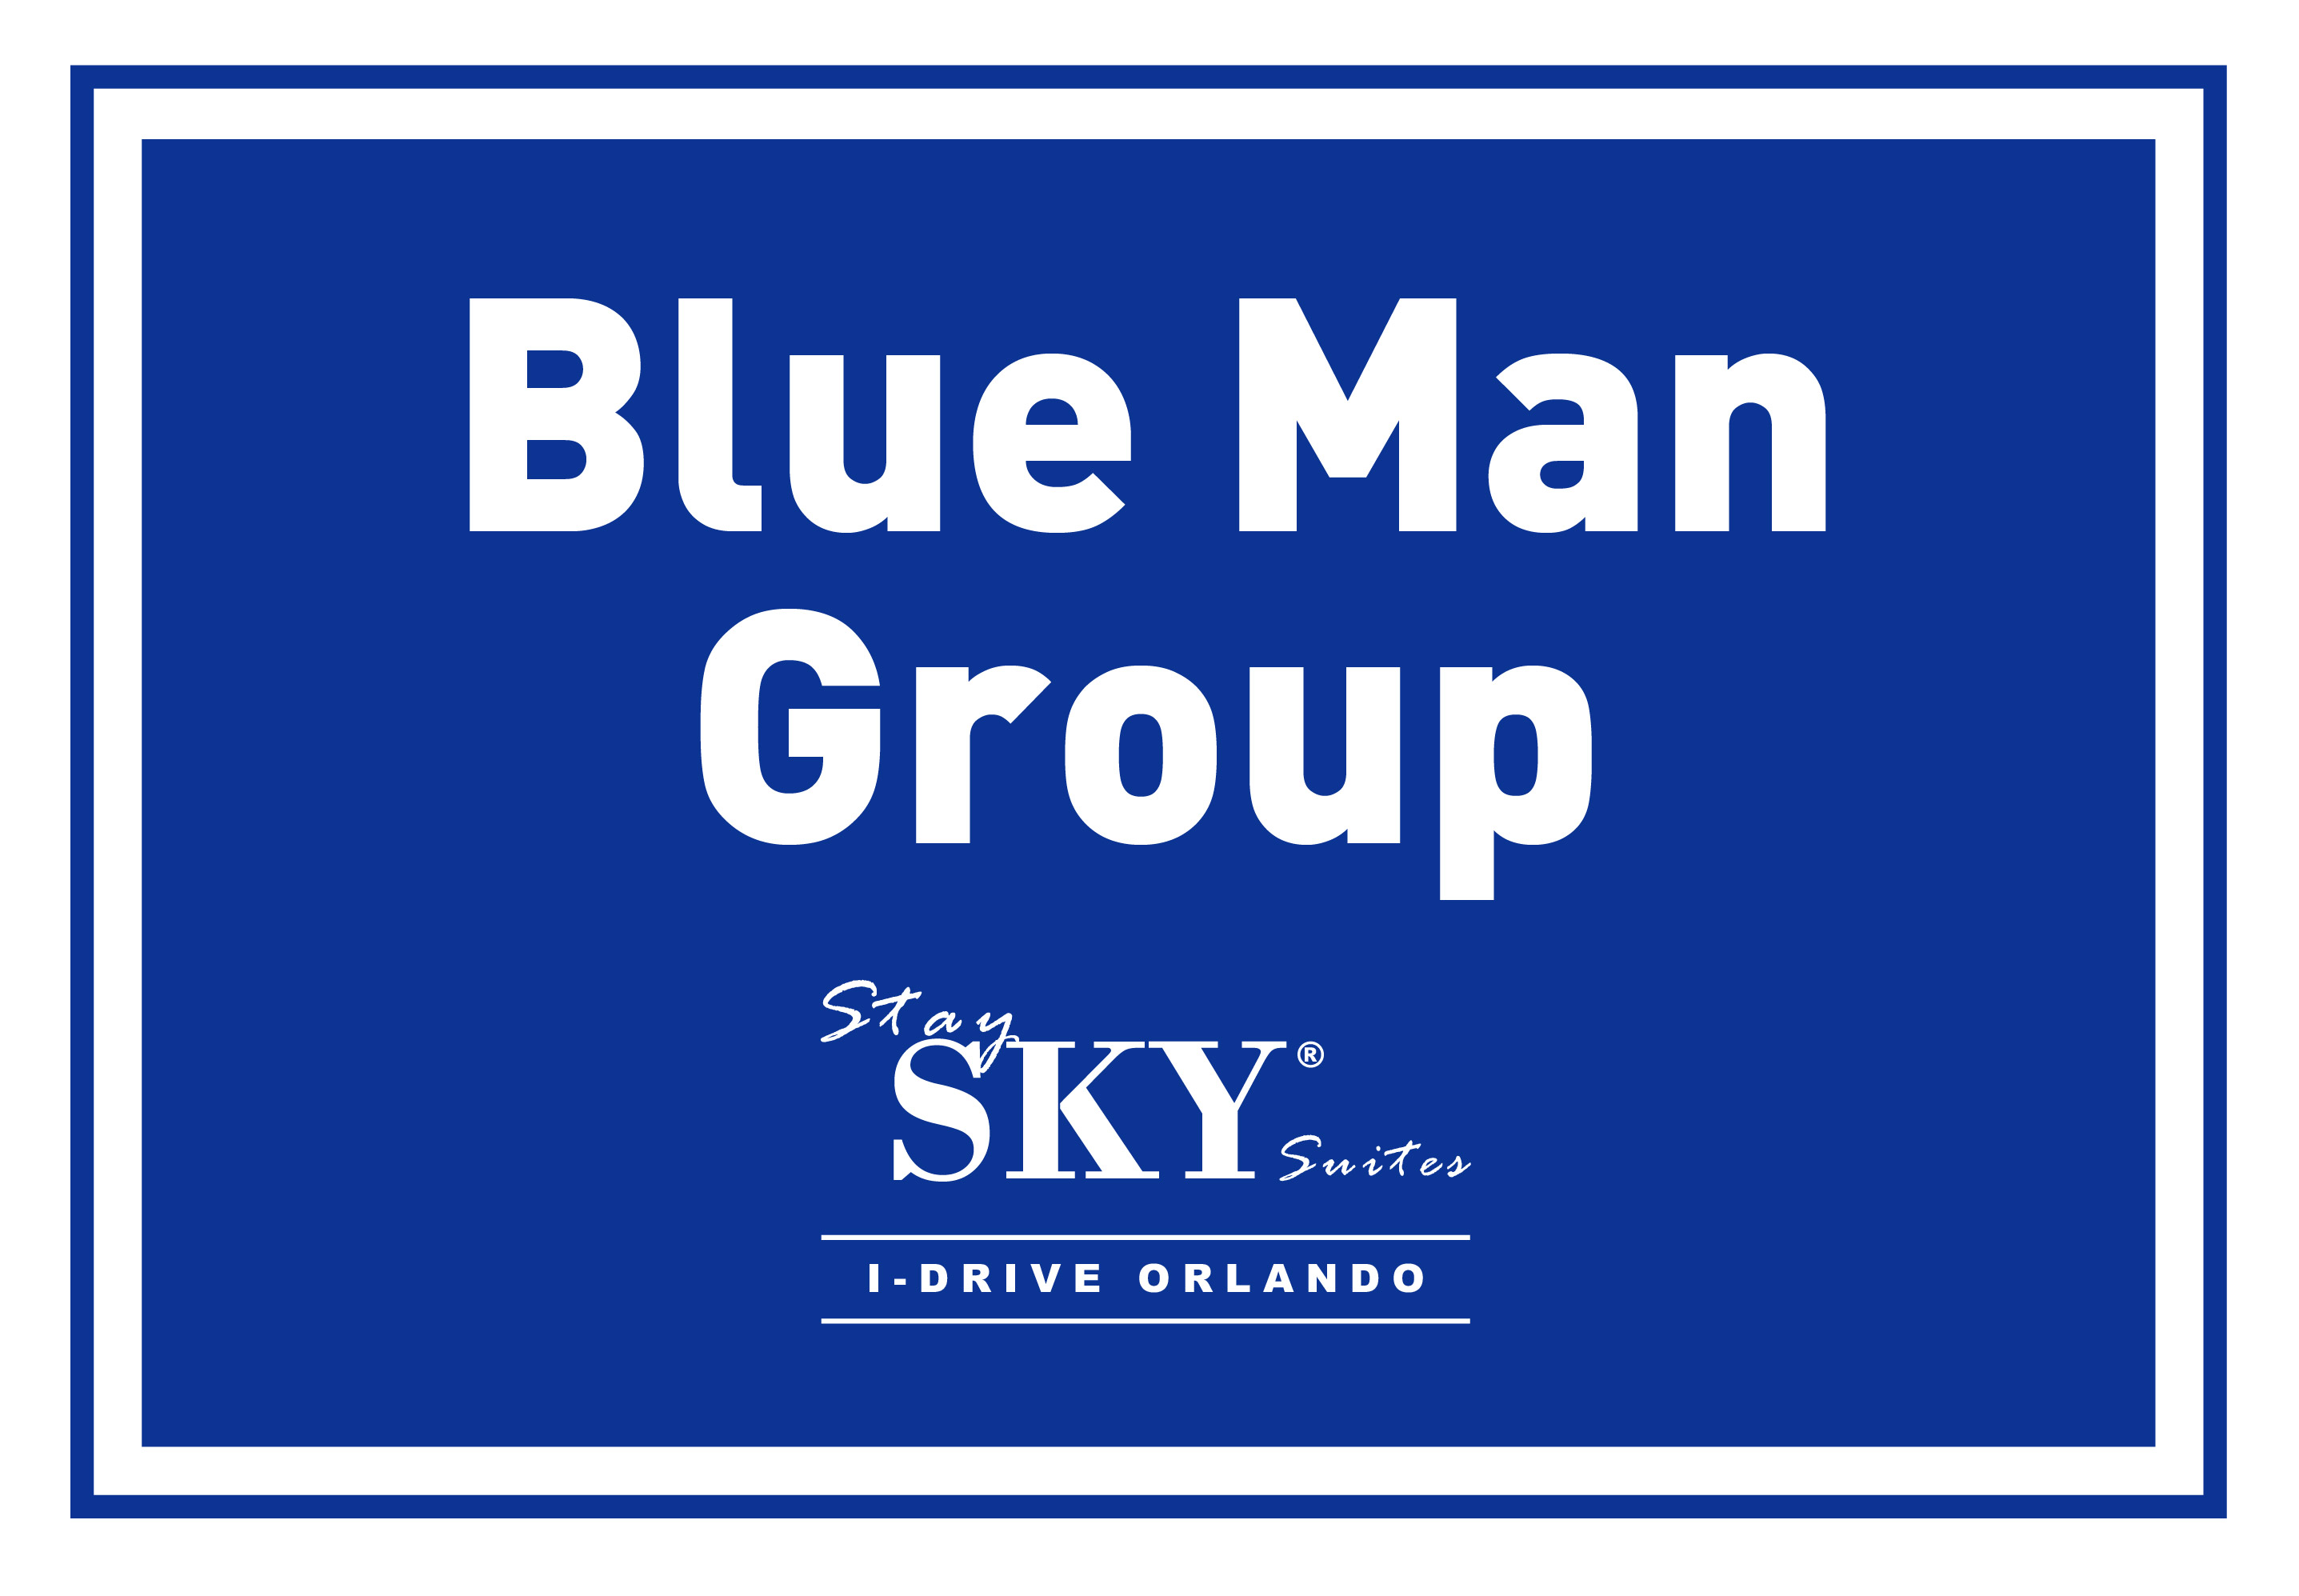 StaySky Suites I - Drive - Orlando Resorts - BlueMan